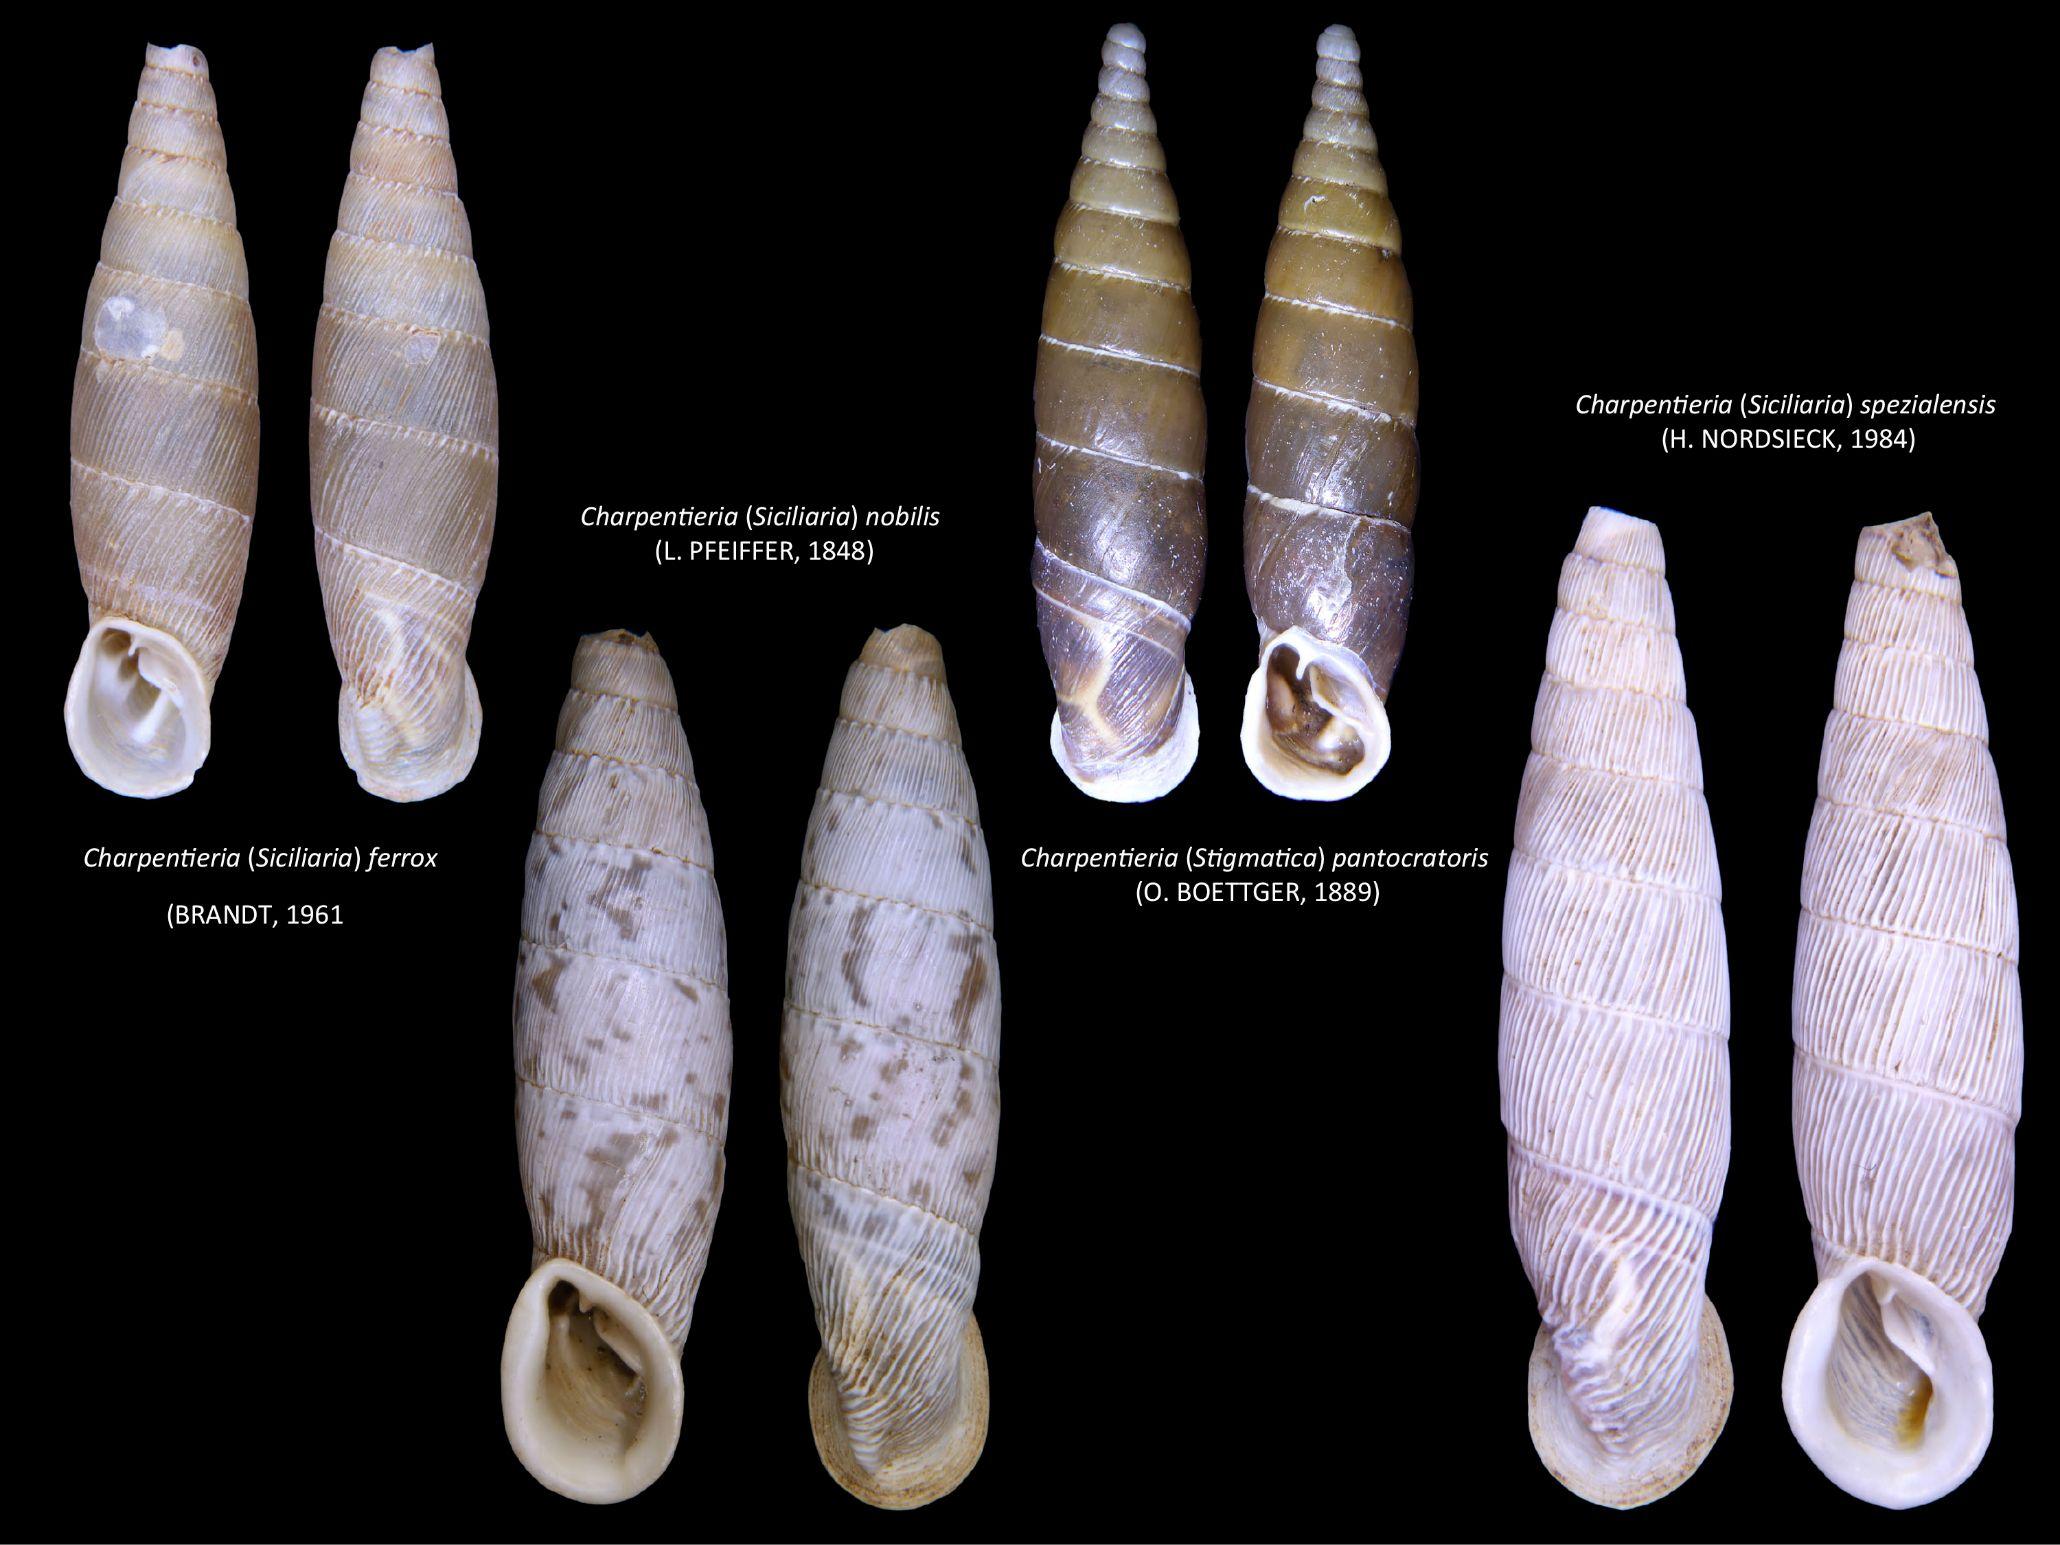 Shells of selected Siciliaria species